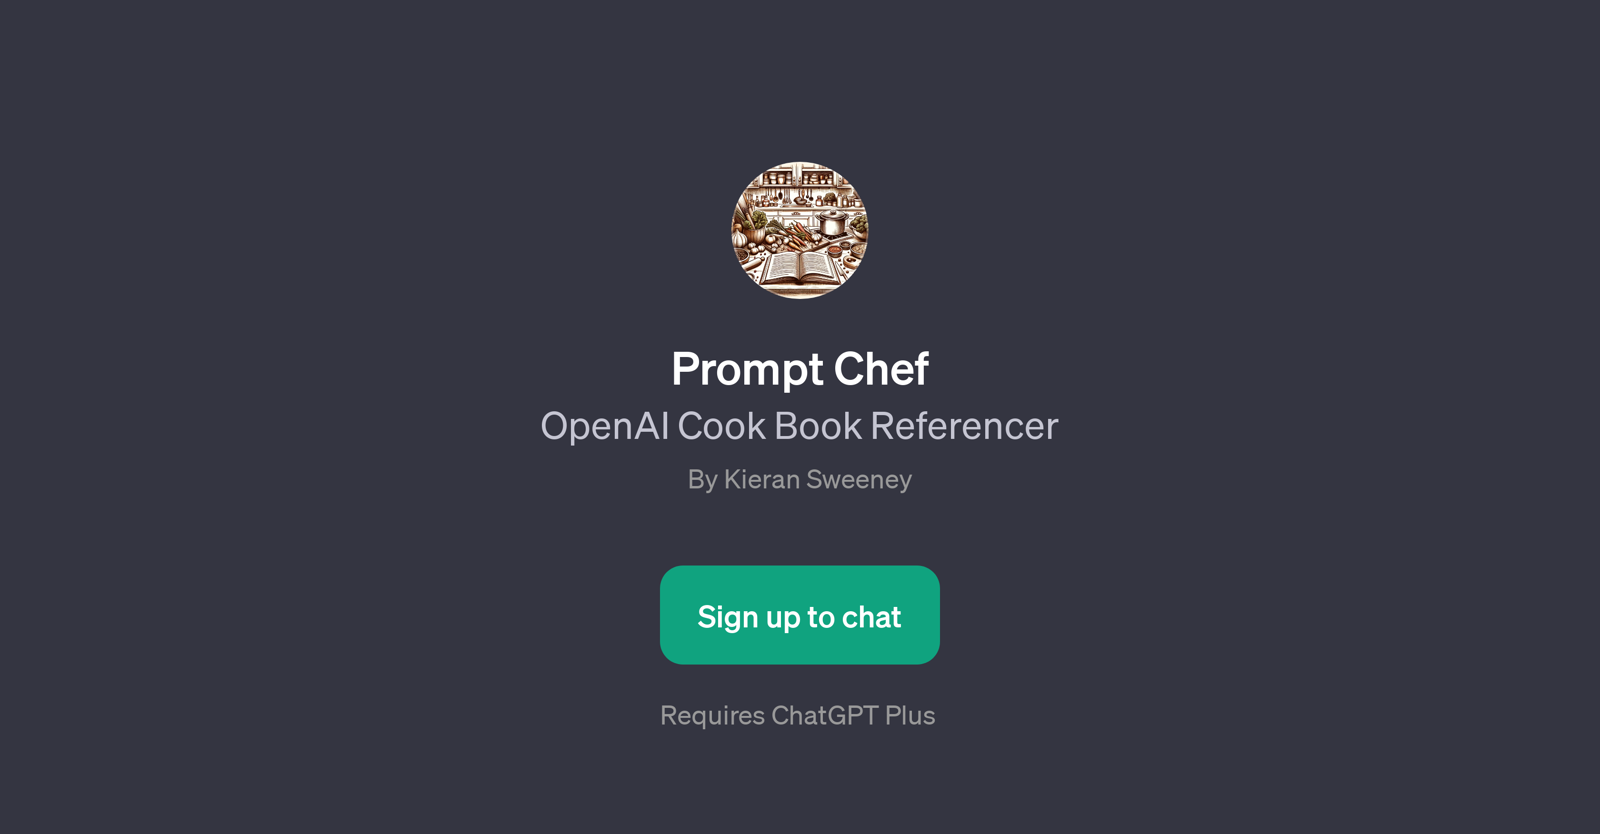 Prompt Chef website